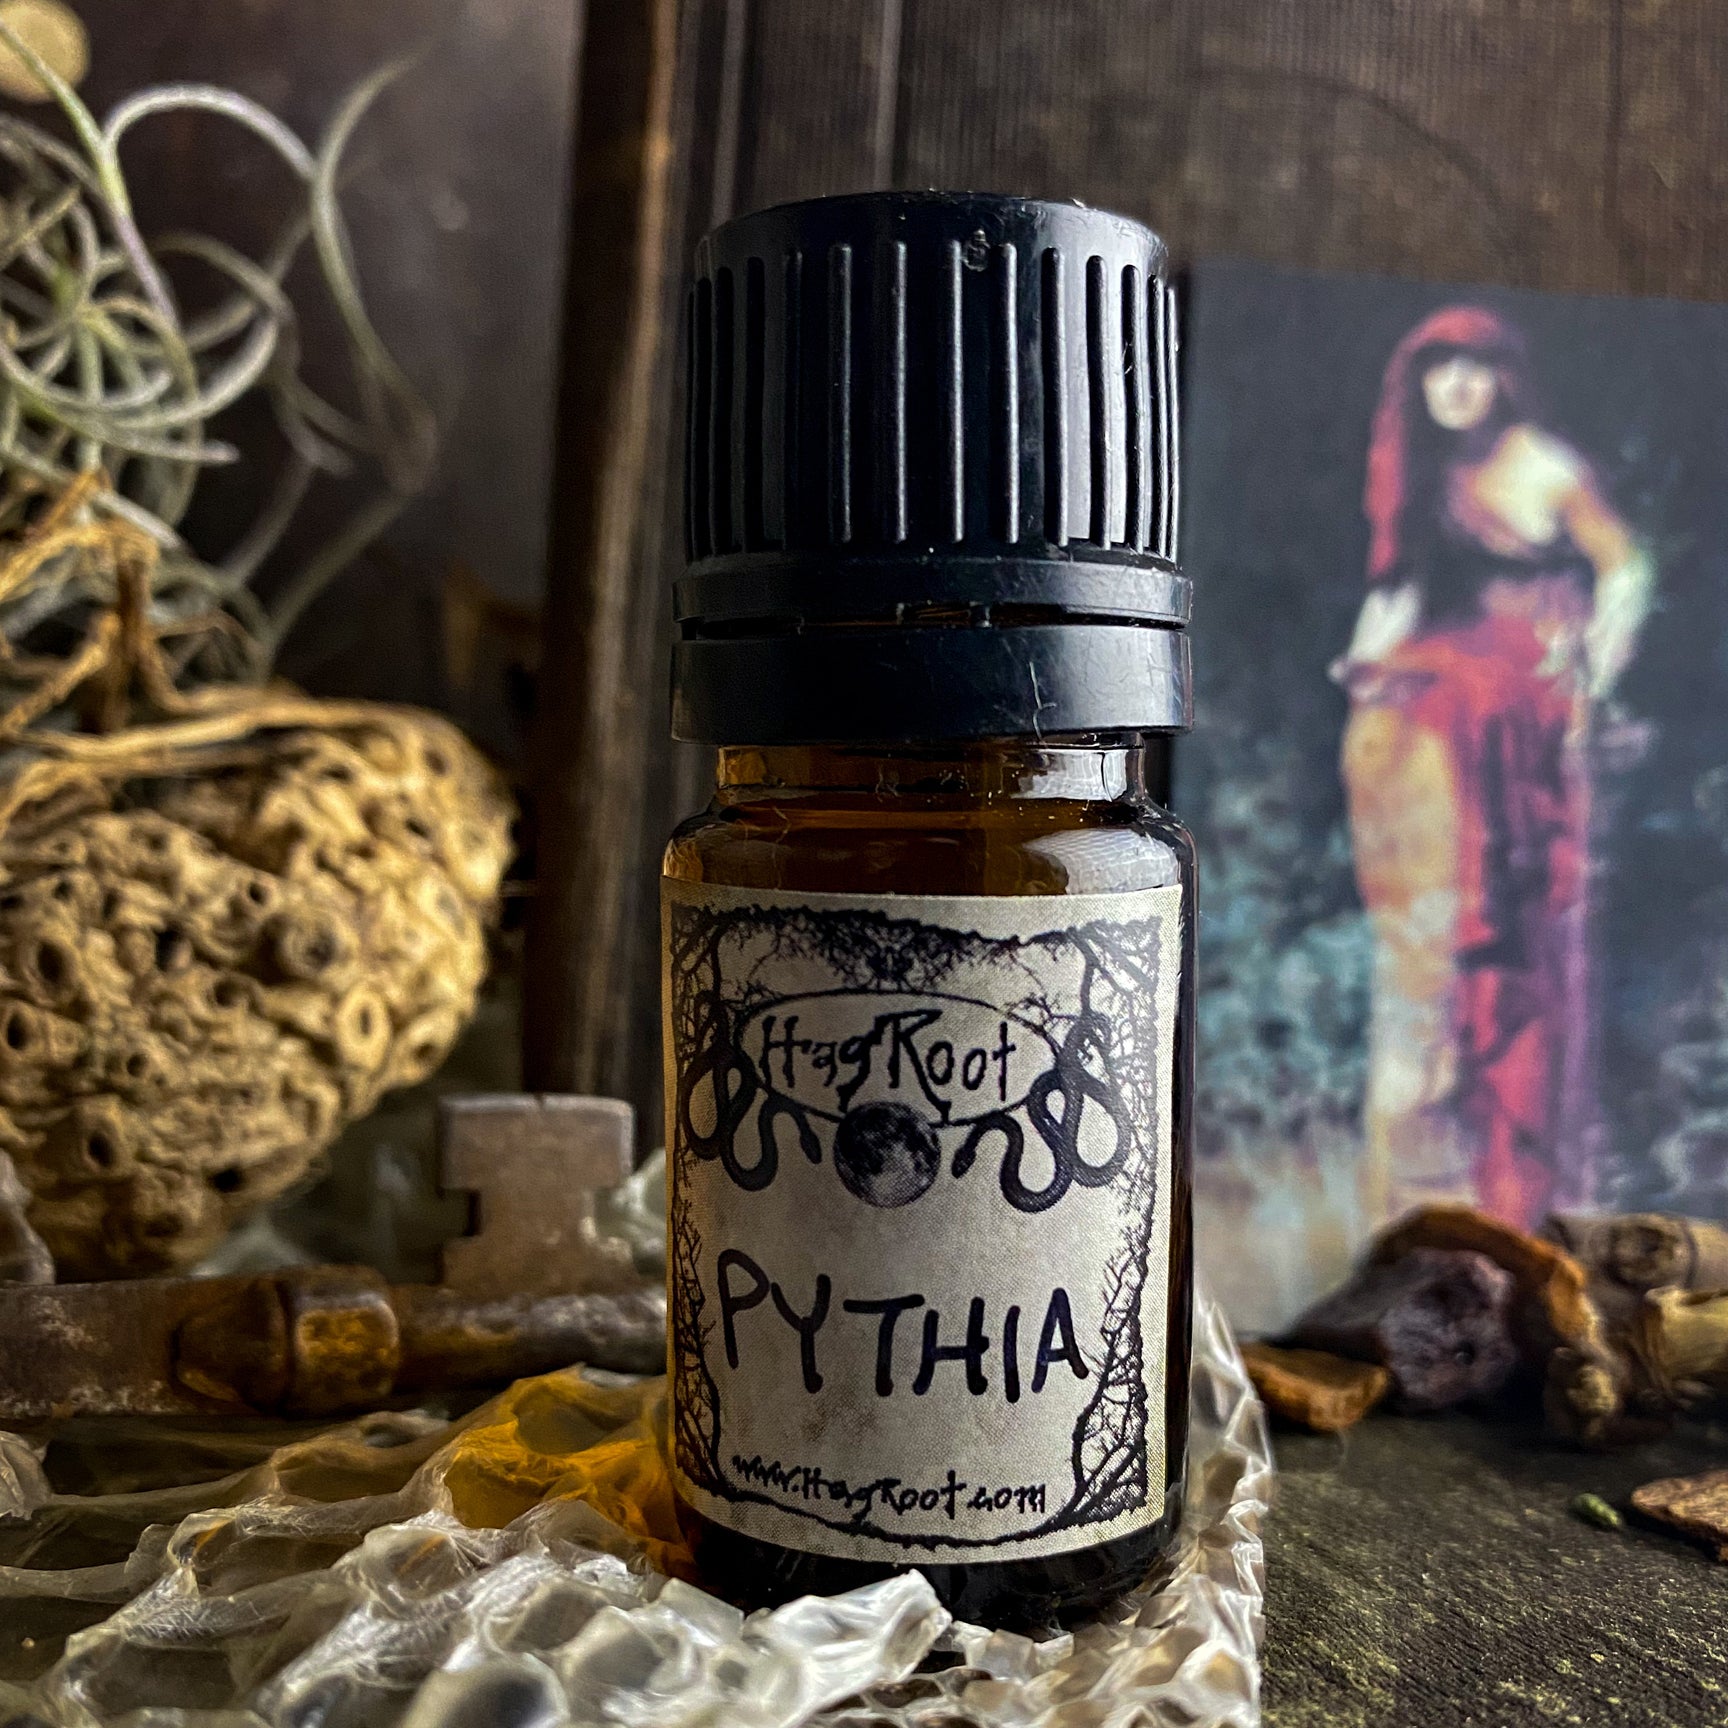 PYTHIA-(Sandalwood, Patchouli, Tonka Bean, Musk, Lotus Flower, Cardamom)-Perfume, Cologne, Anointing, Ritual Oil